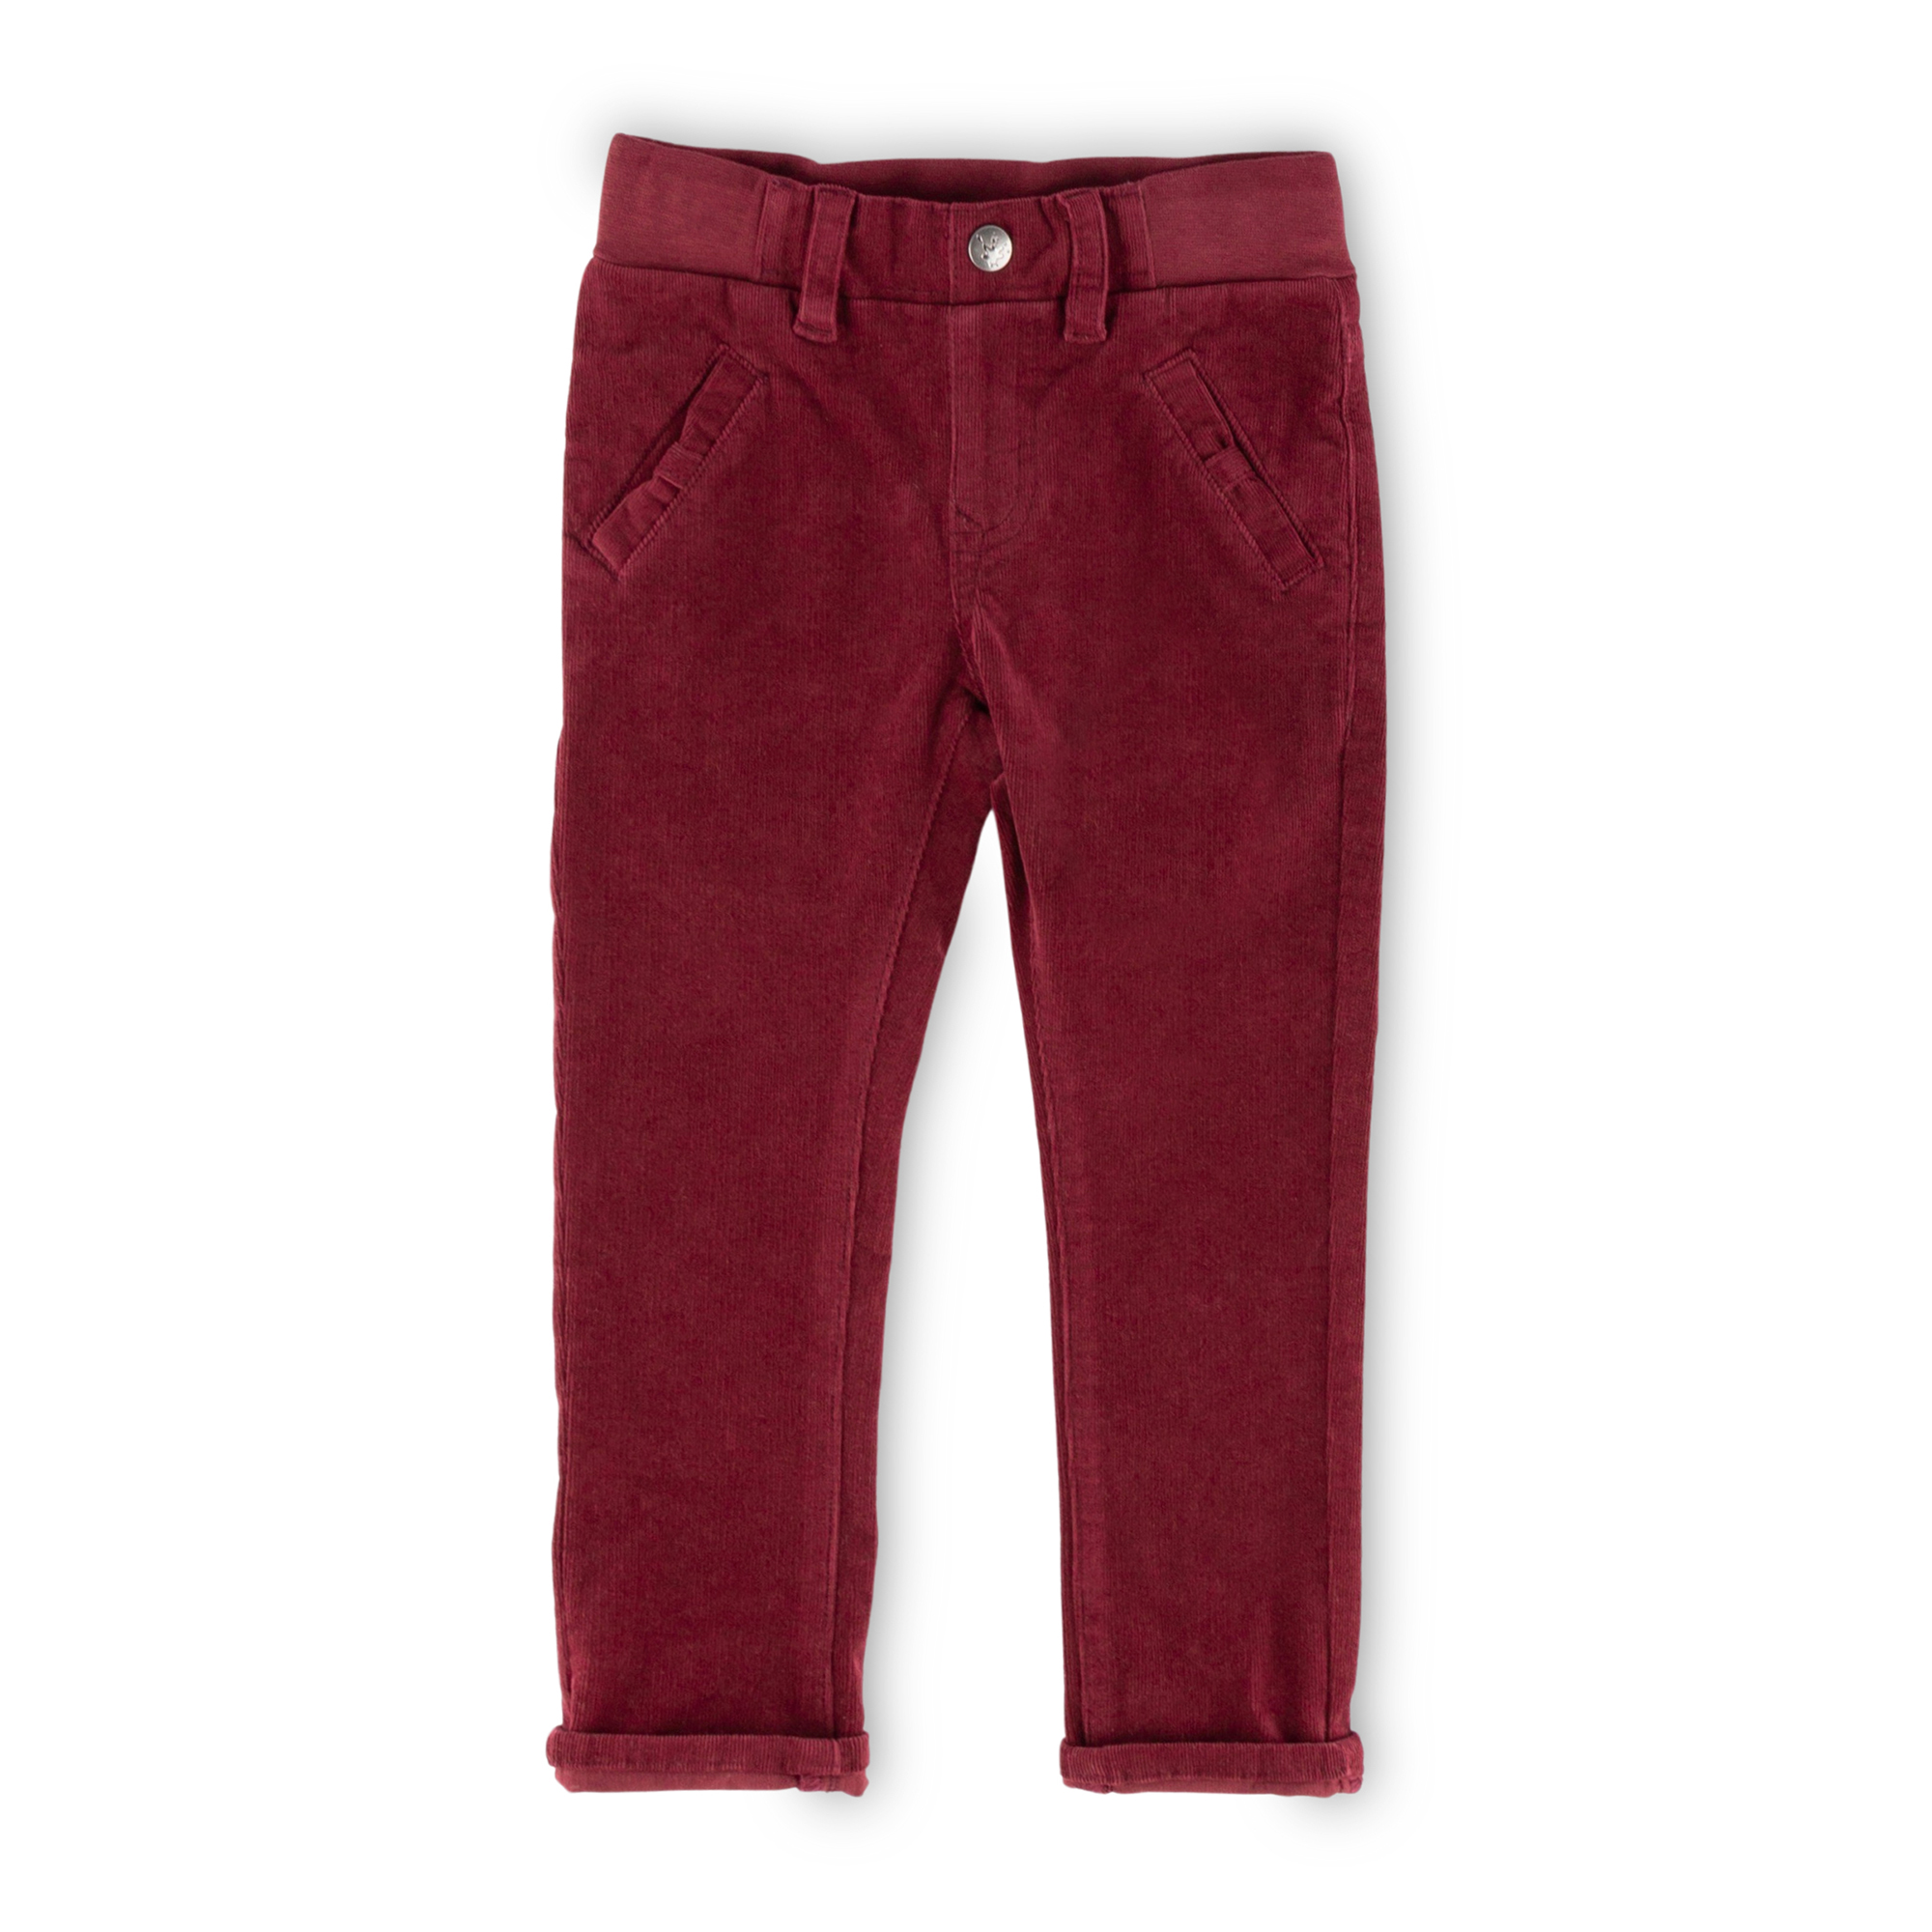 Children's corduroy pants, dark red